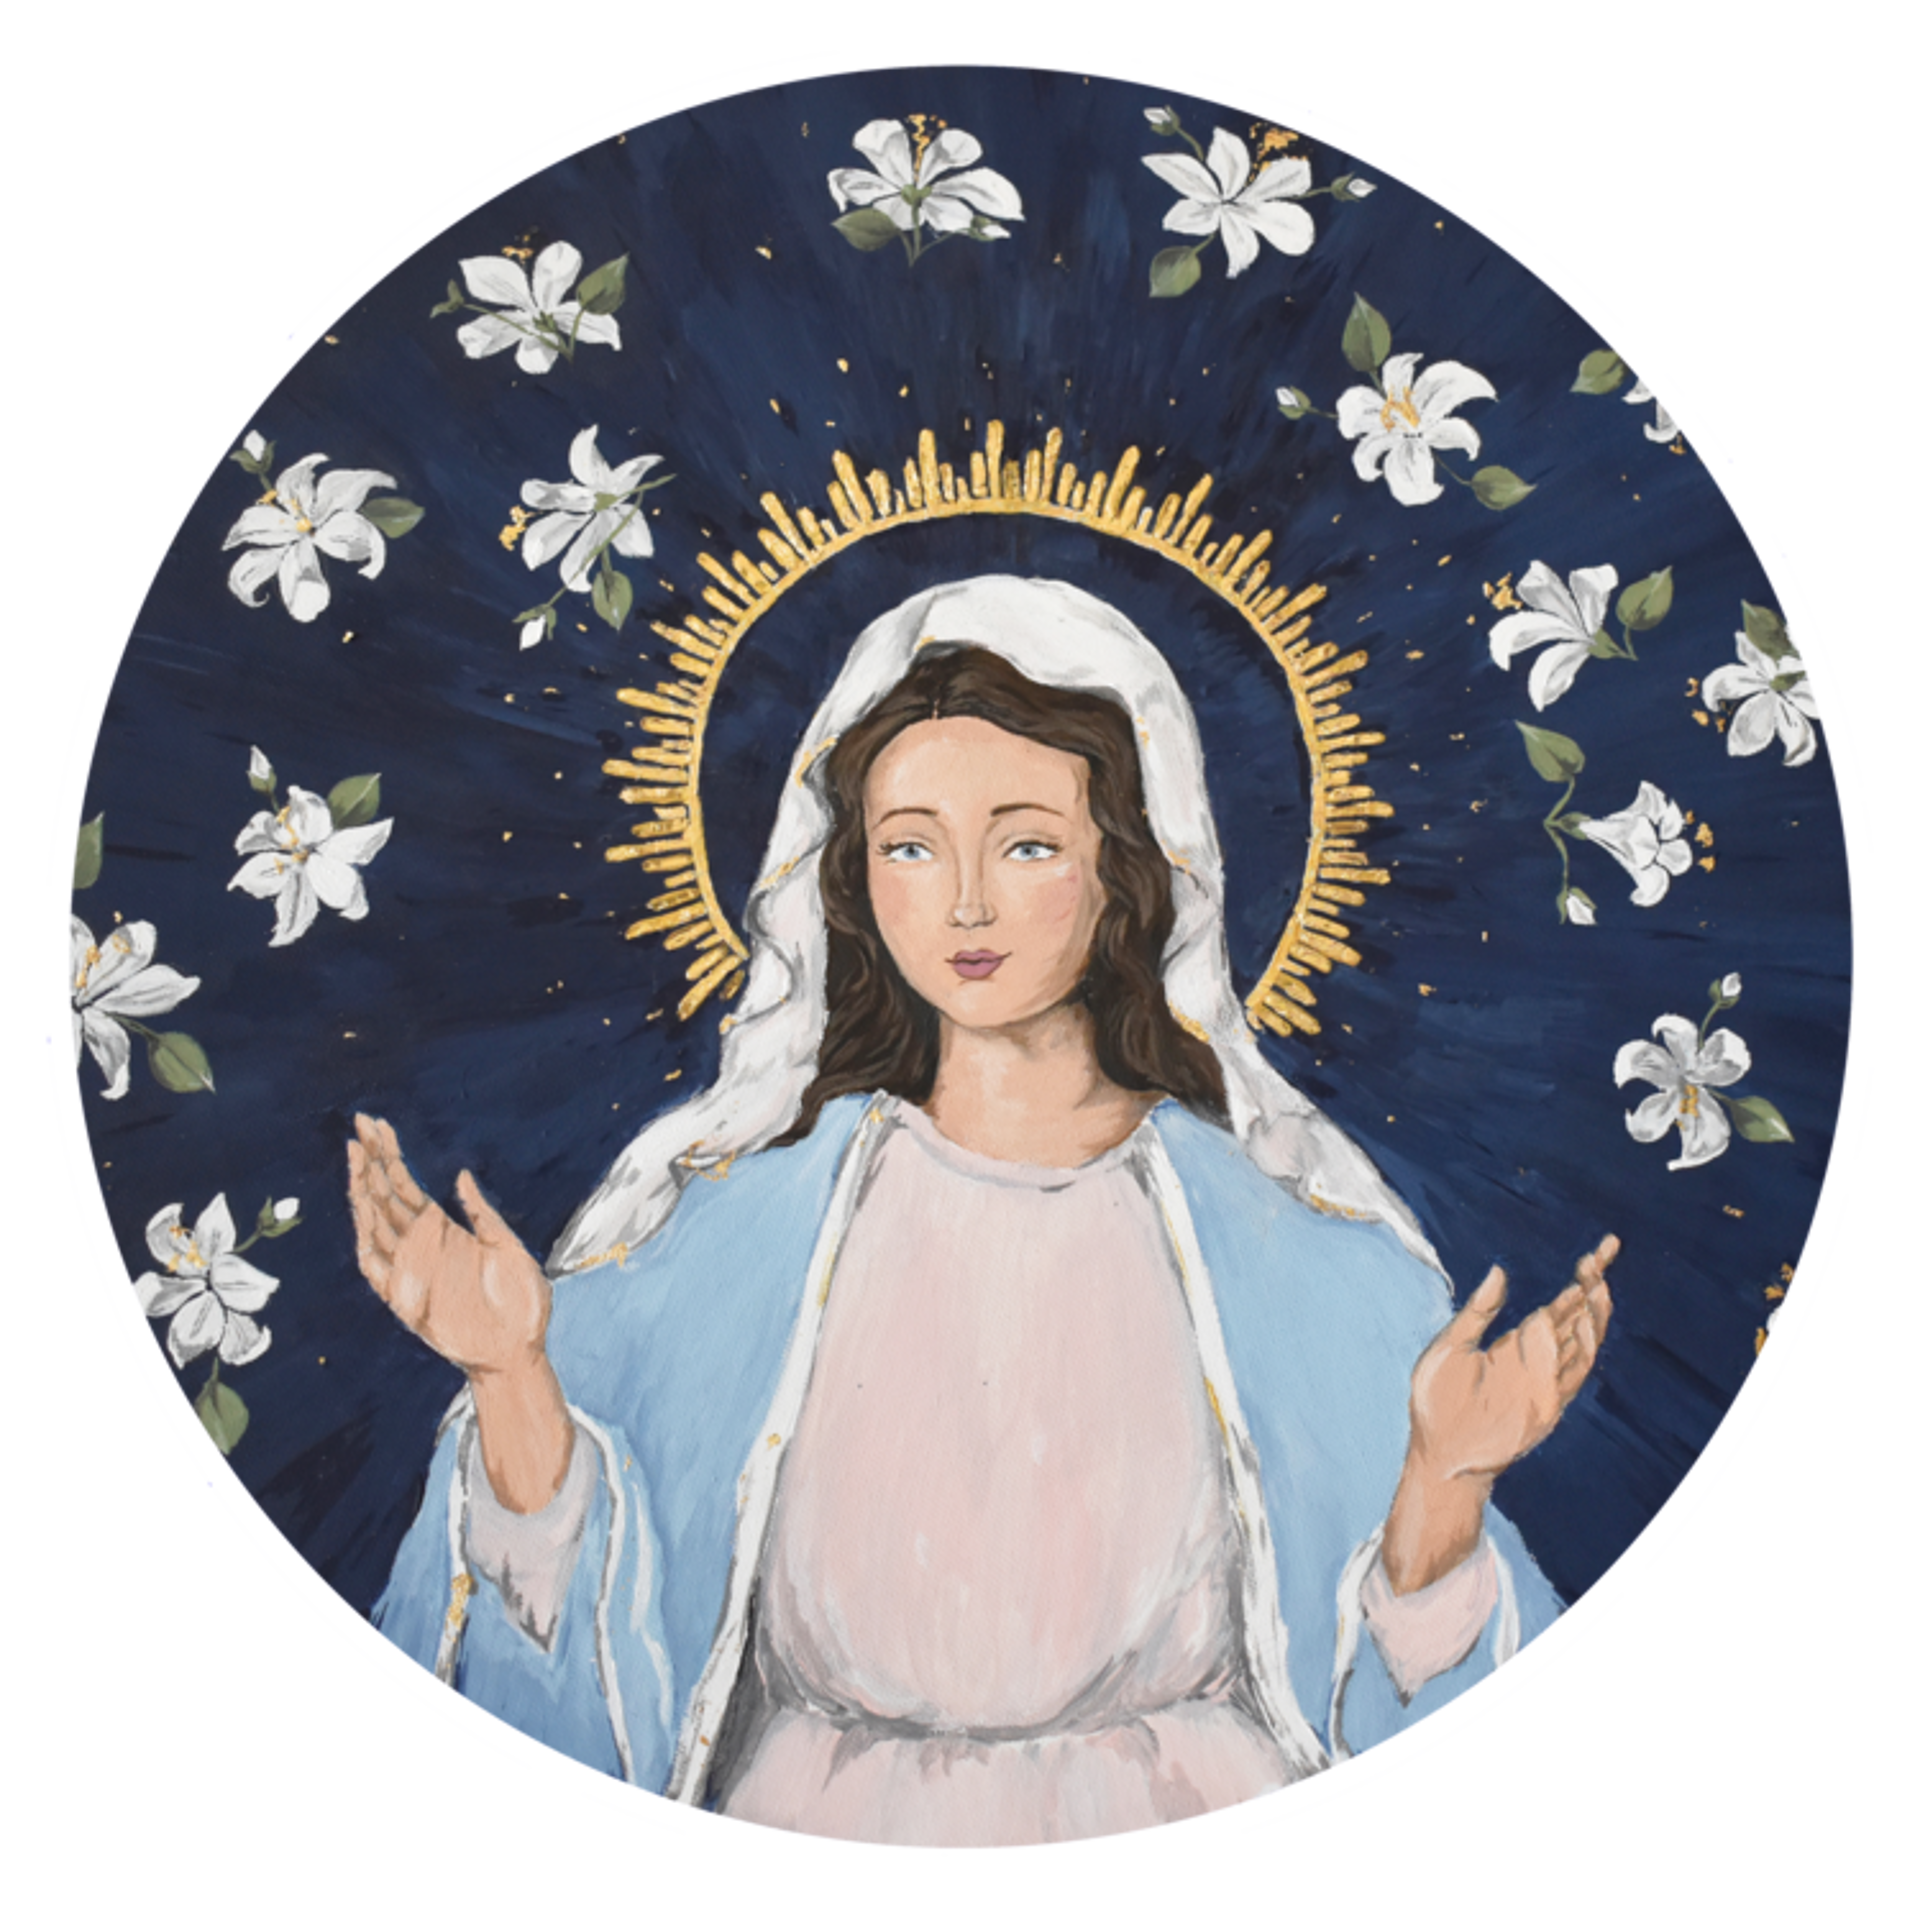 Virgin Mary Inv. # 1 by Cora Barhorst